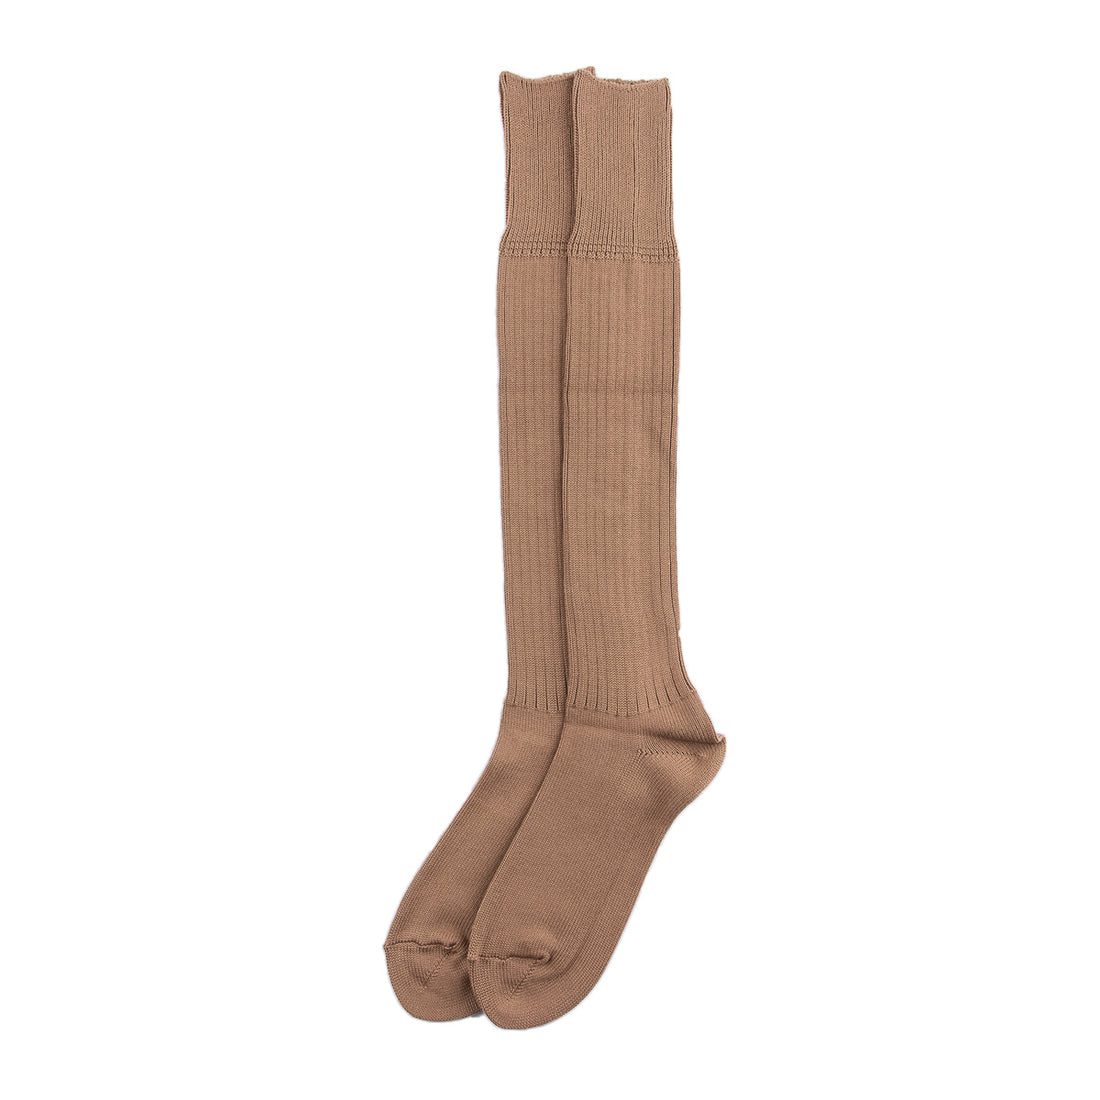 Clinch Boots Long Hose Socks - Brown Rib - Standard & Strange